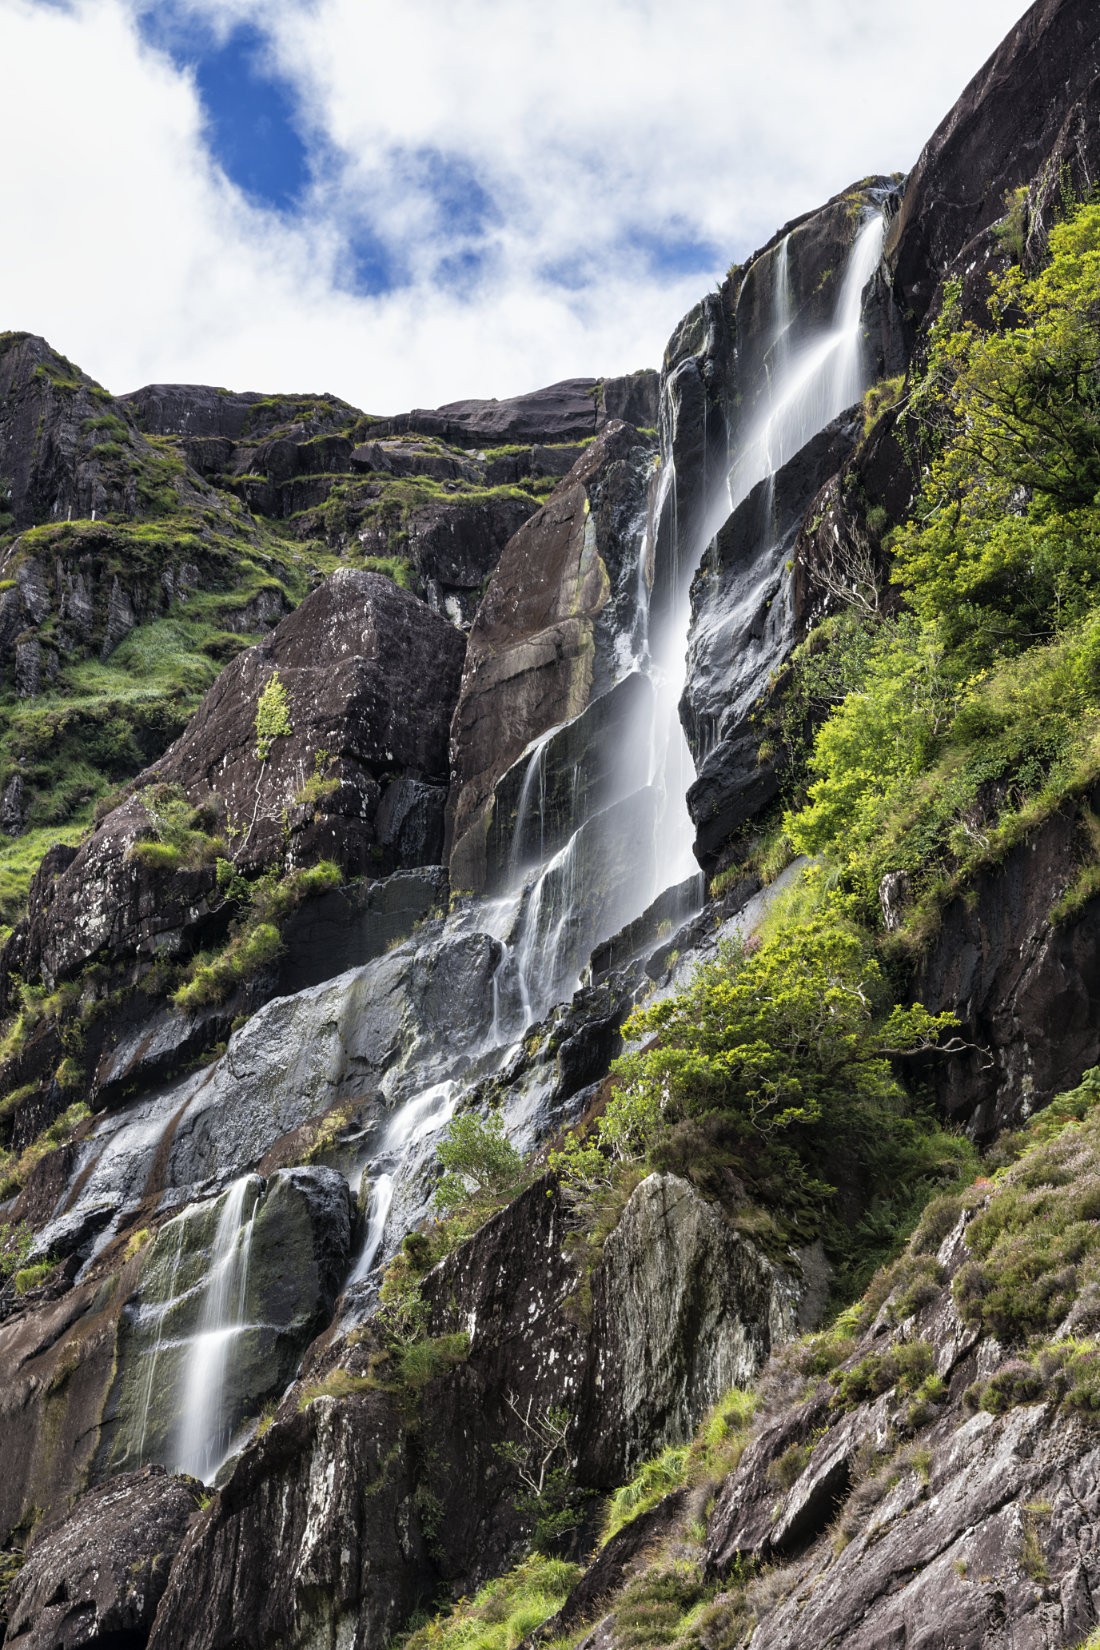 The Mare's Tail waterfall on the Beara Peninsula, Co. Cork, Ireland